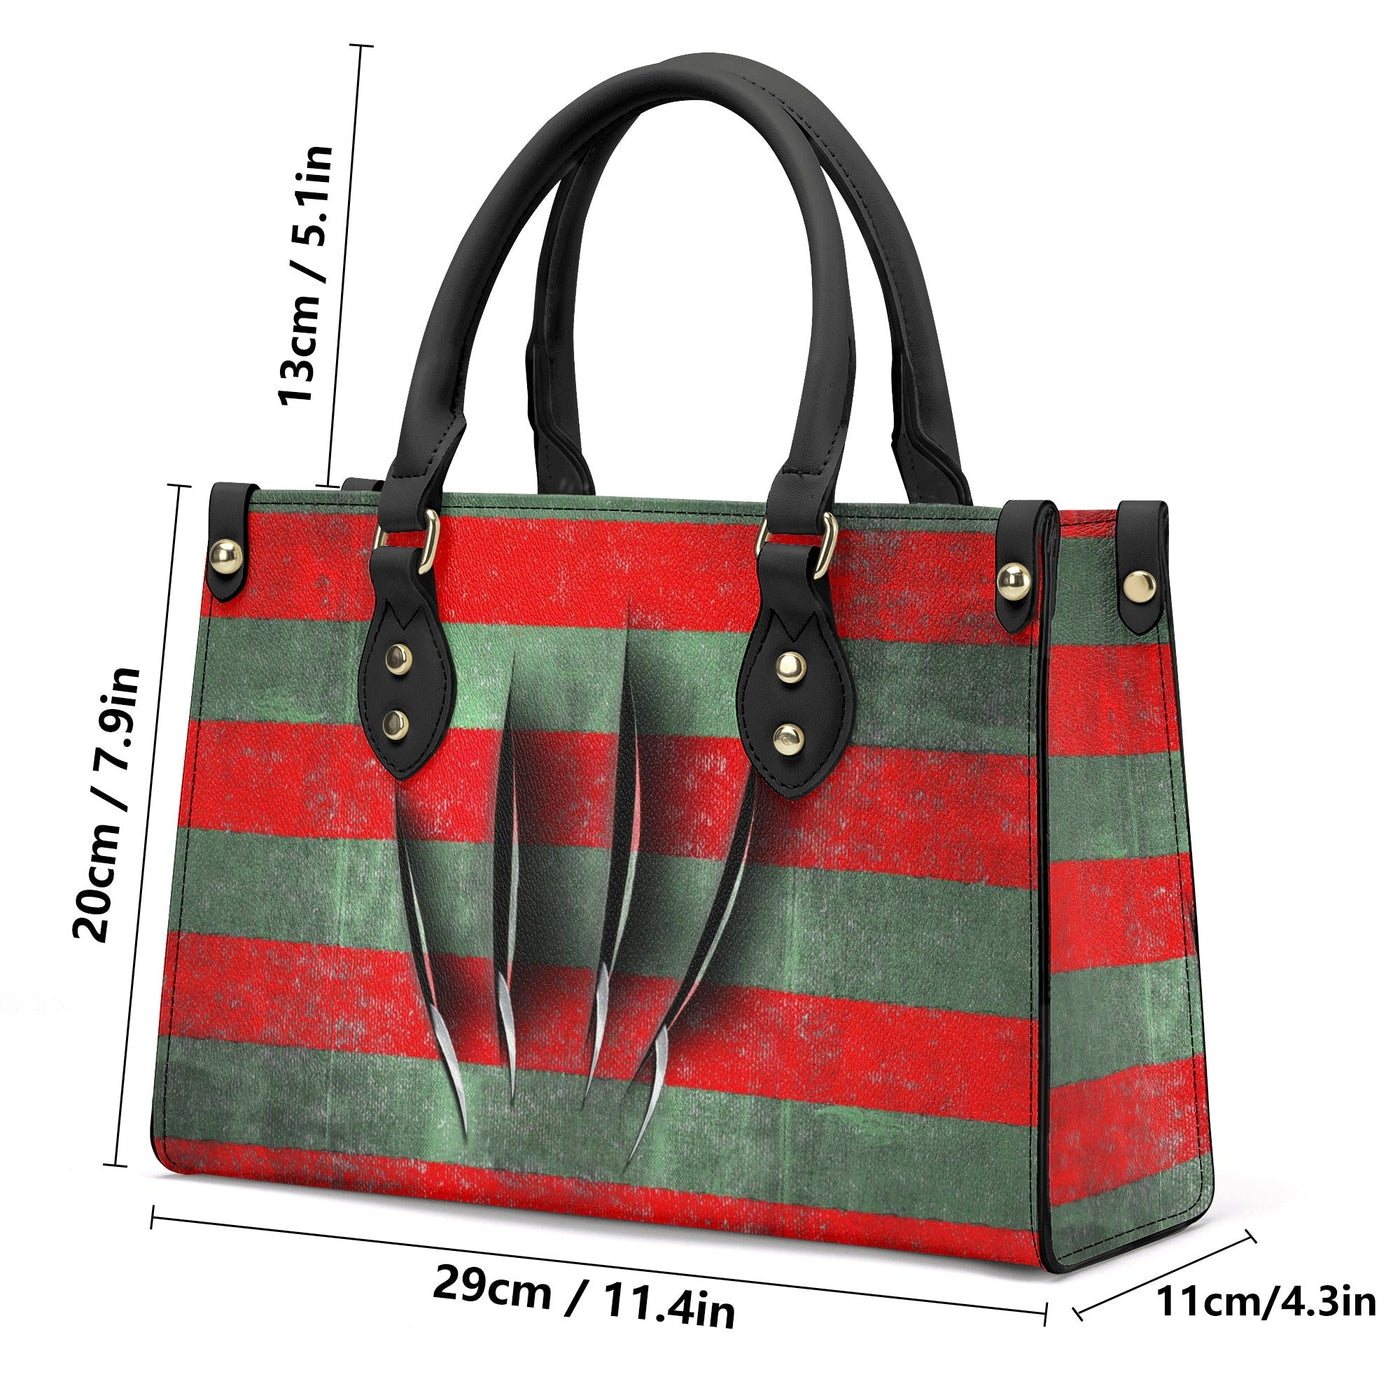 Freddy's Krueger Blades Luxury Tote Handbag - The Nightmare on Elm Street